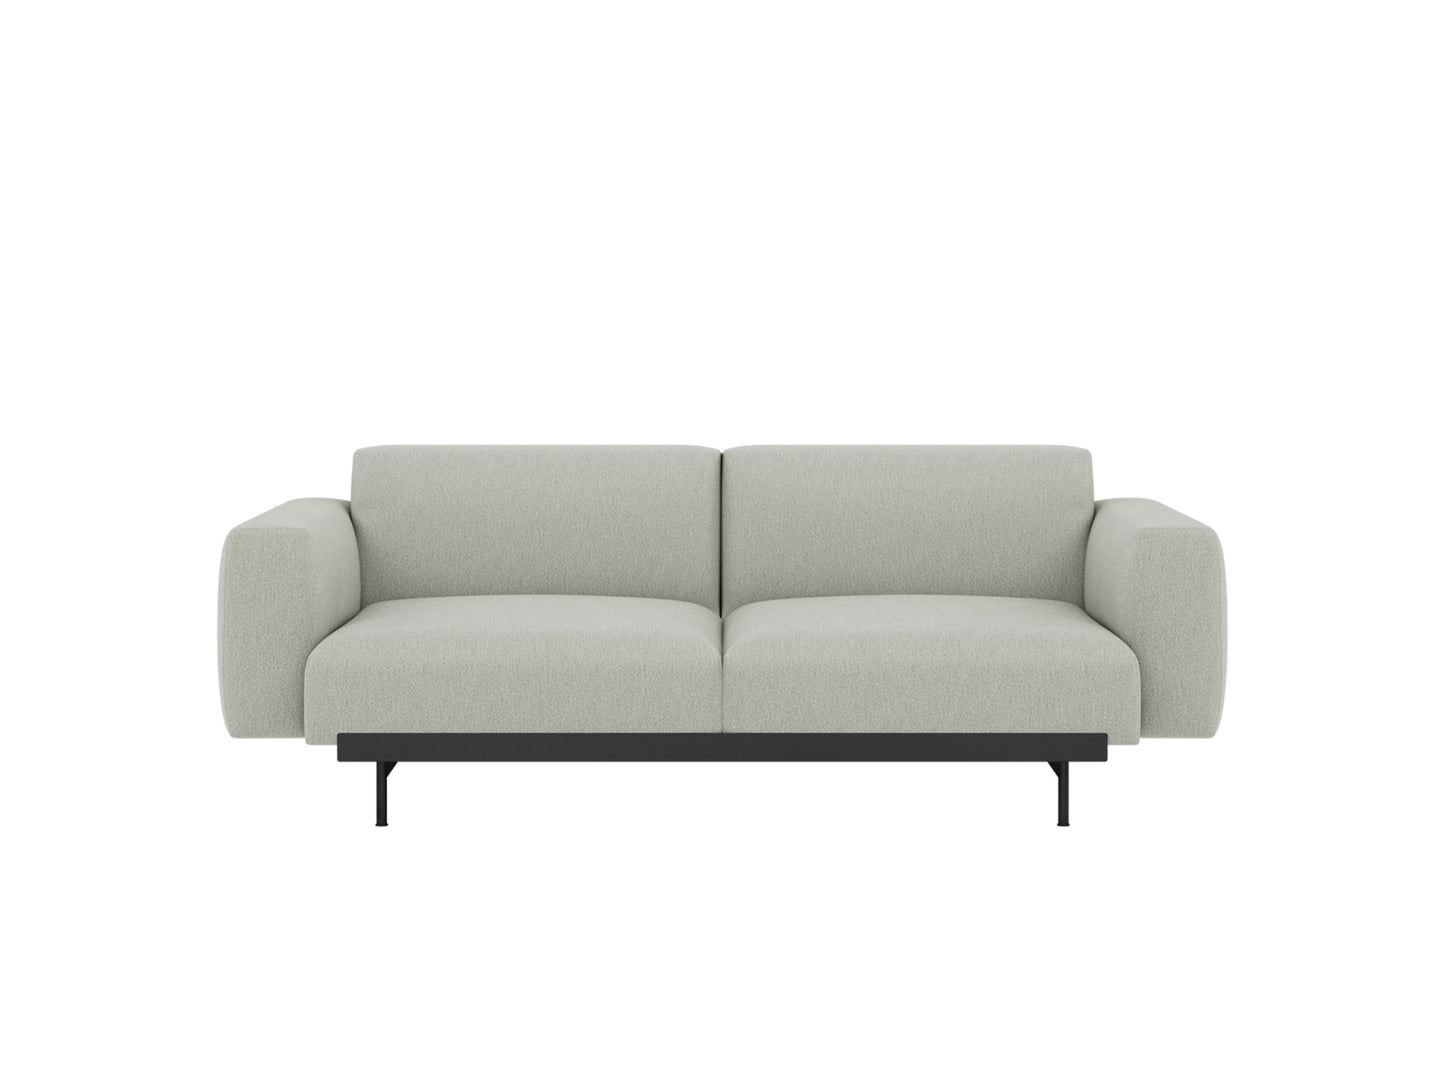 In Situ 2-Seater Modular Sofa by Muuto - Configuration 1 / Clay  12